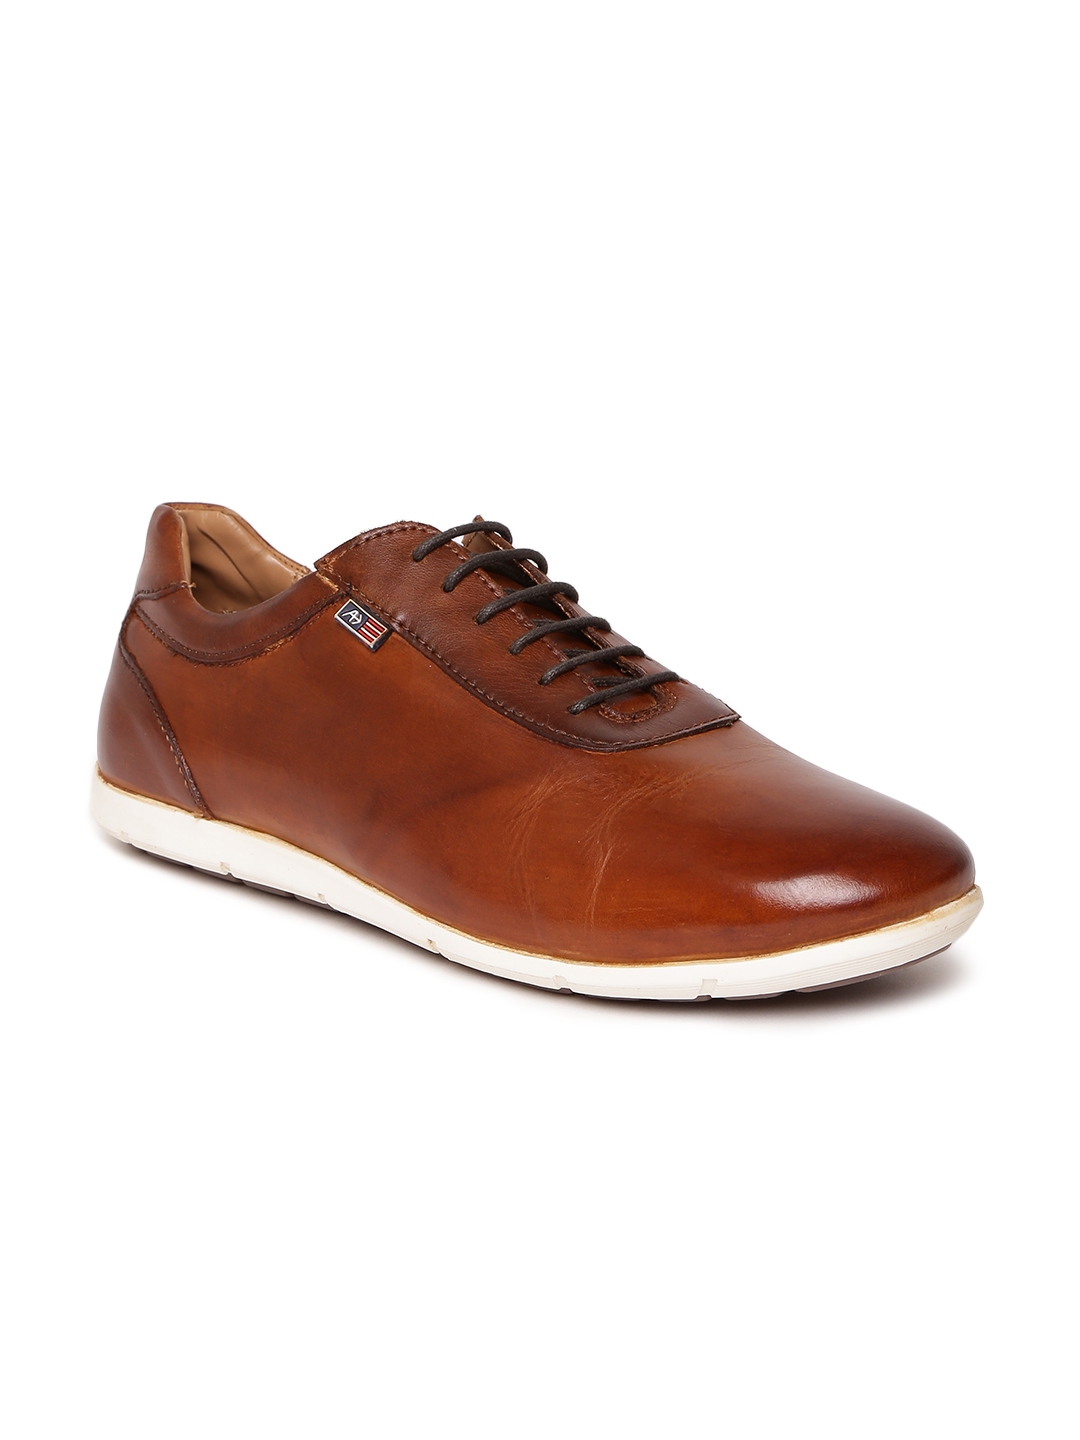 Buy Arrow Men Tan Brown Leather Sneakers - Casual Shoes for Men 2440327 ...